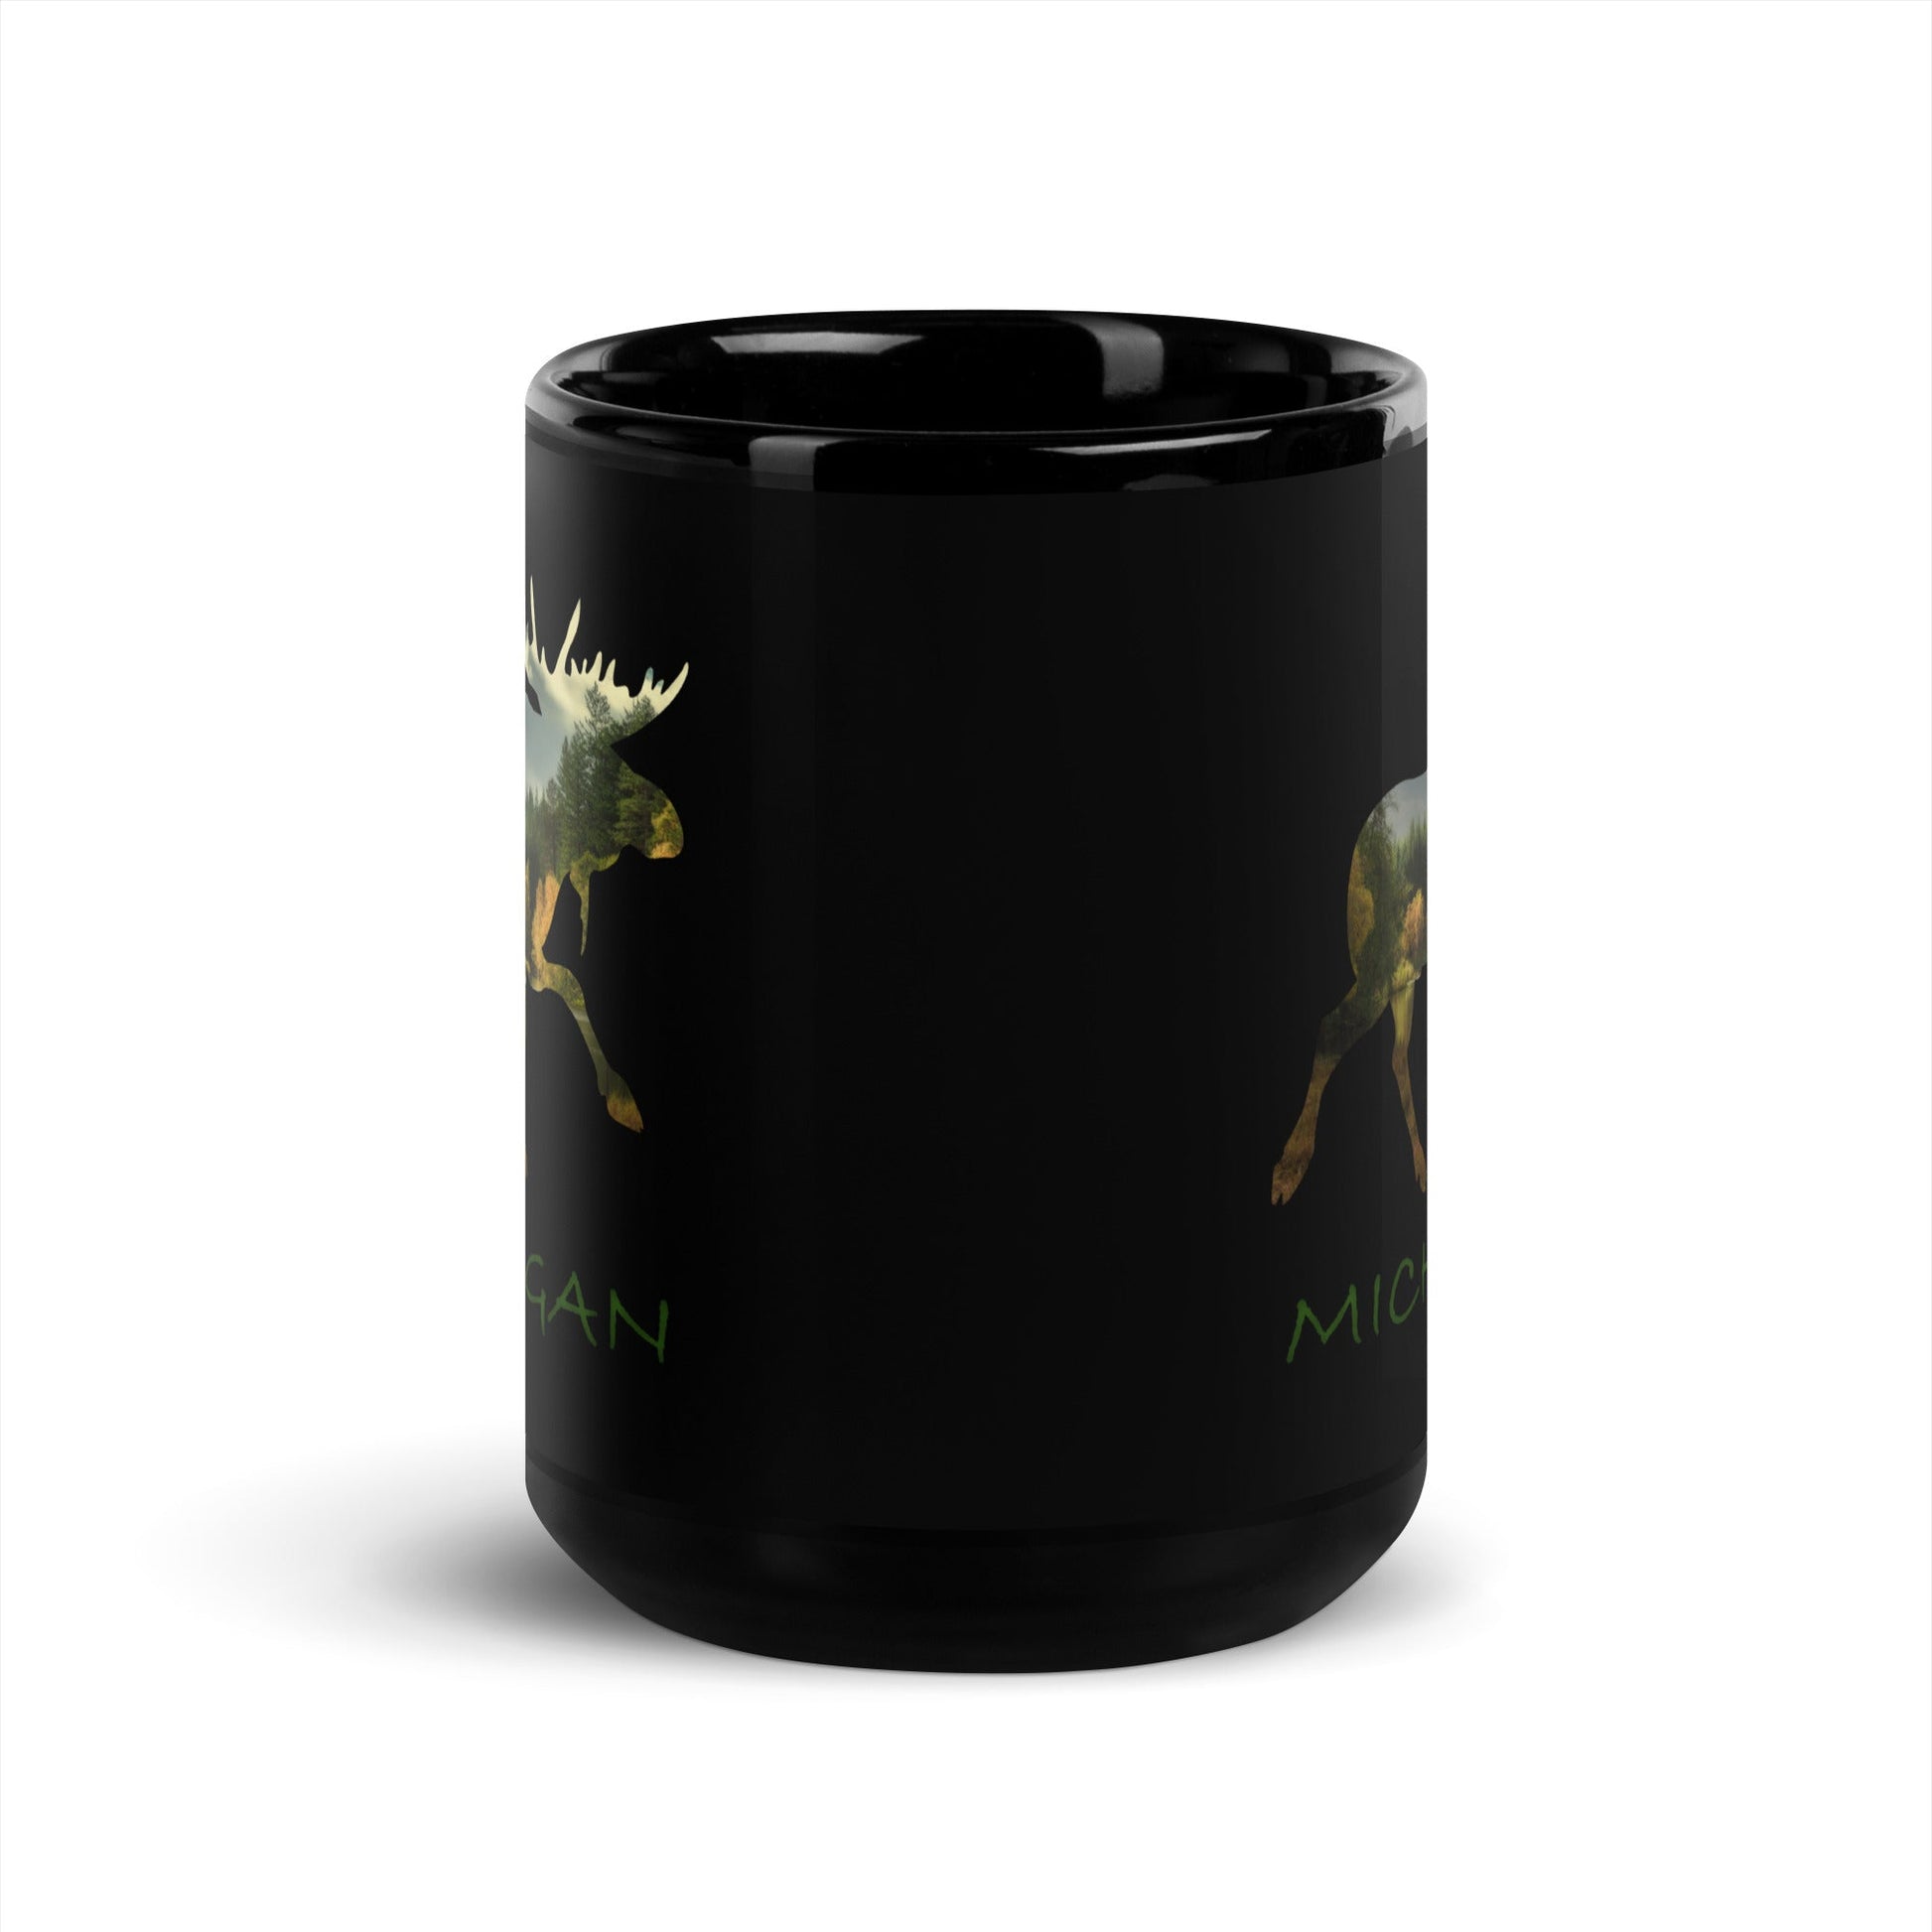 Michigan Souvenir Moose Black Glossy Ceramic Mug